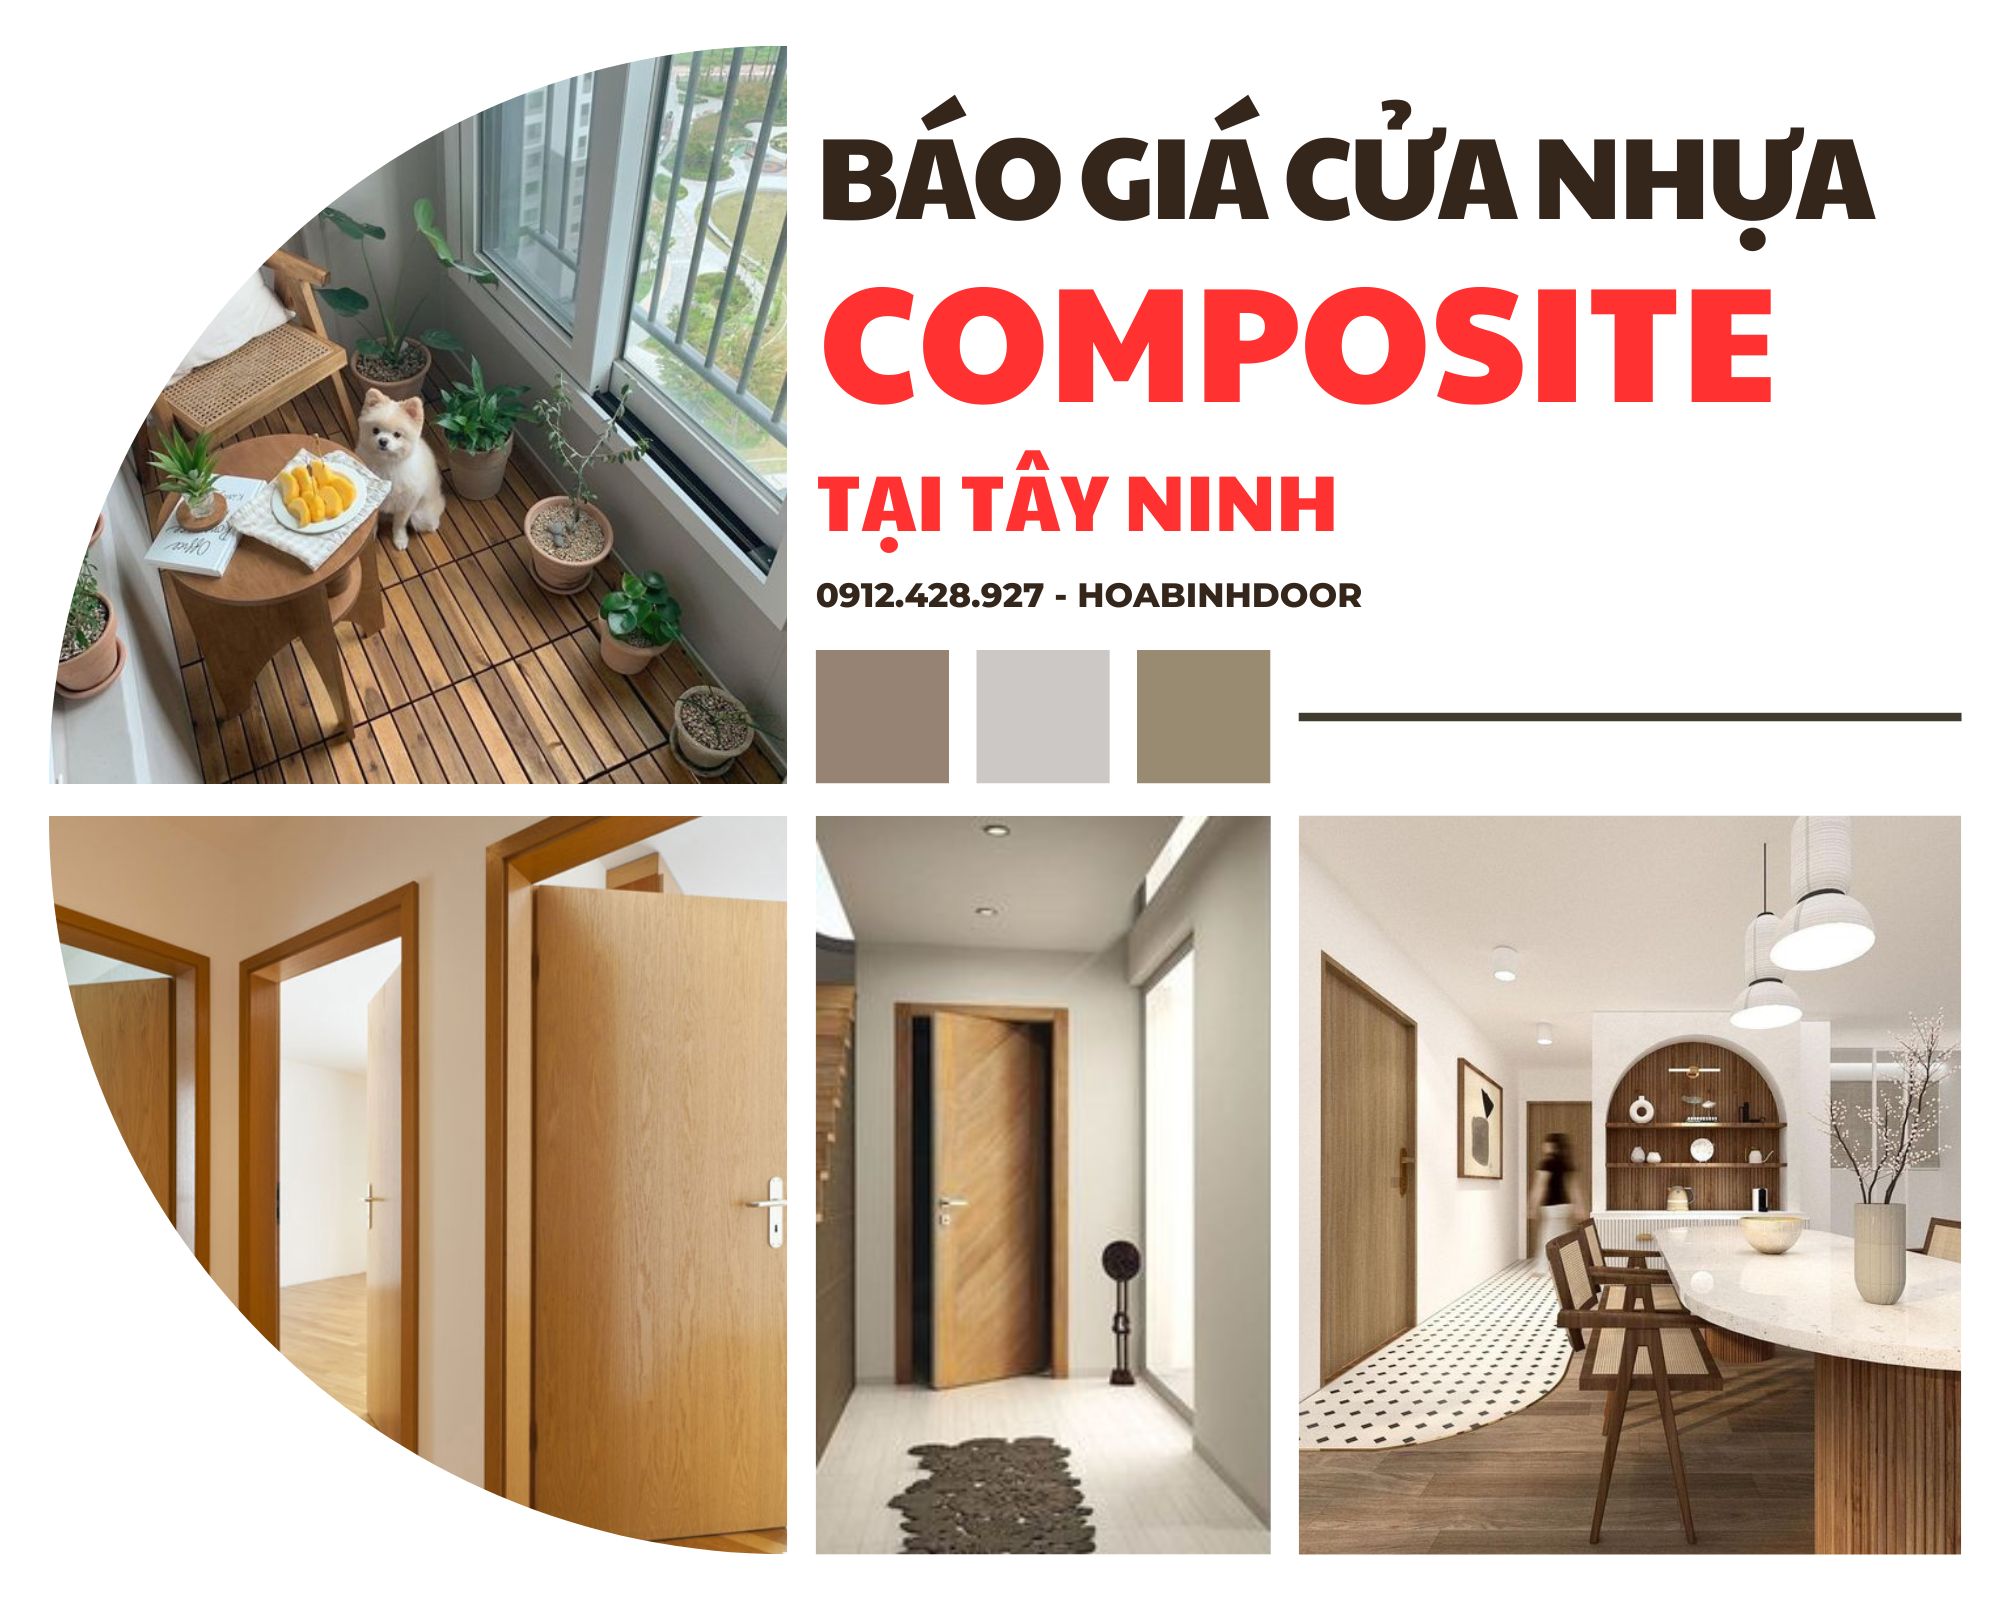 Cửa nhựa Composite tại Tây Ninh | Cửa nhựa giả gỗ